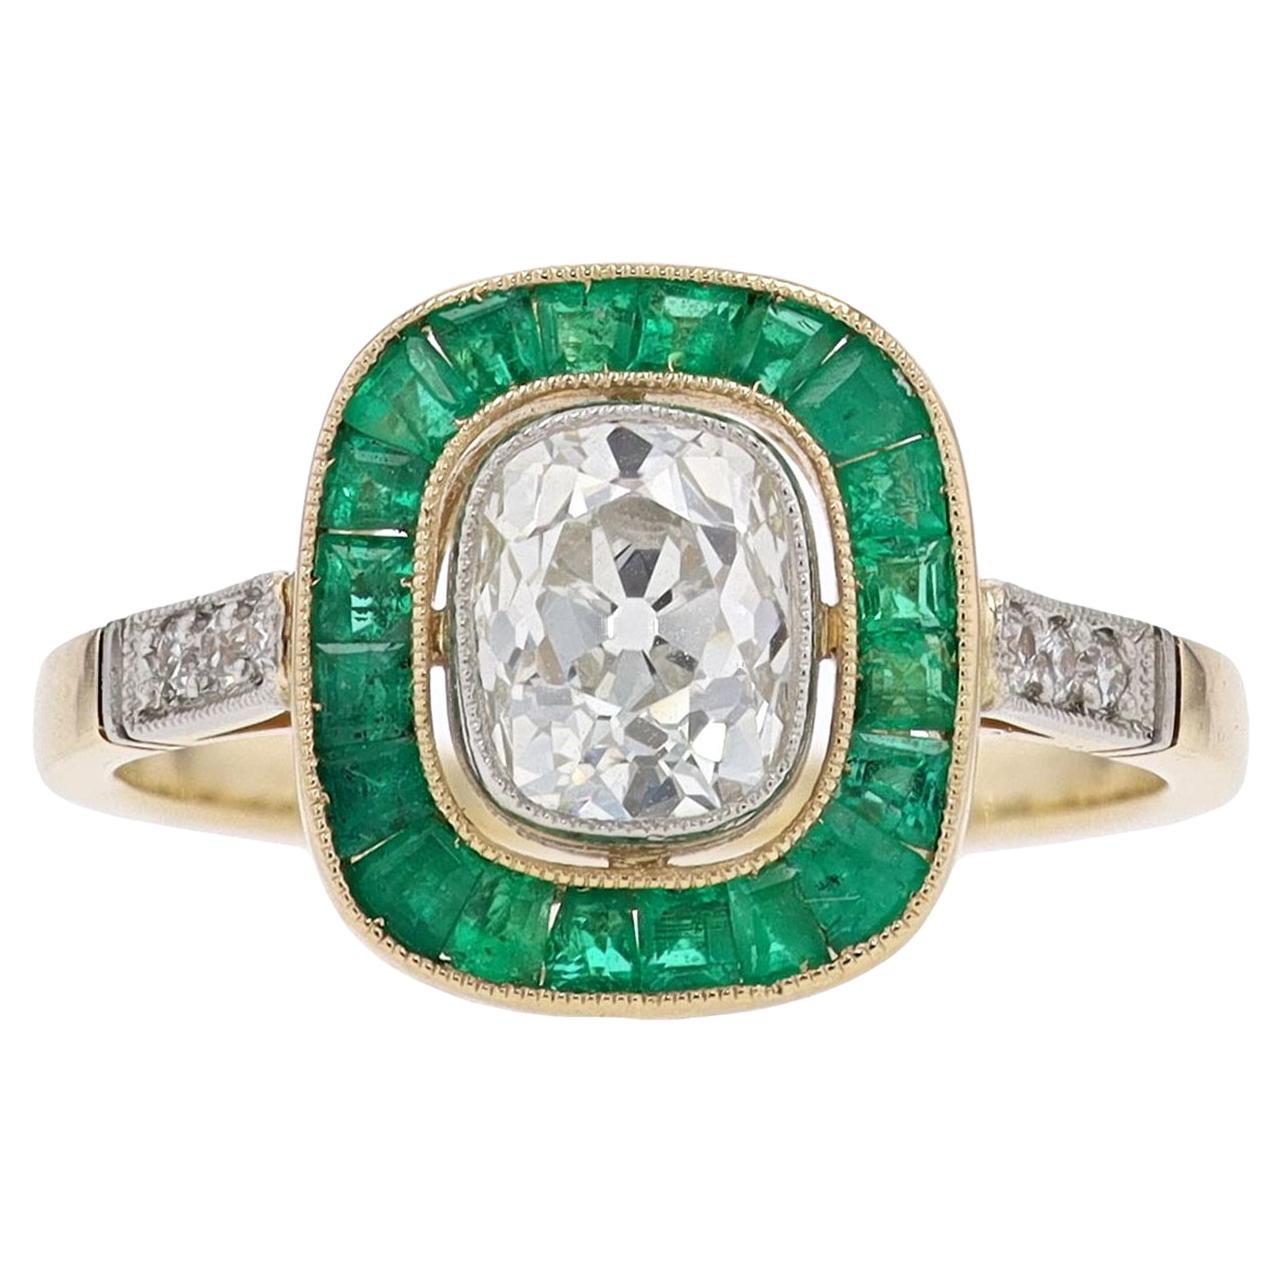 Antique Edwardian Emerald and Diamond Panel Ring